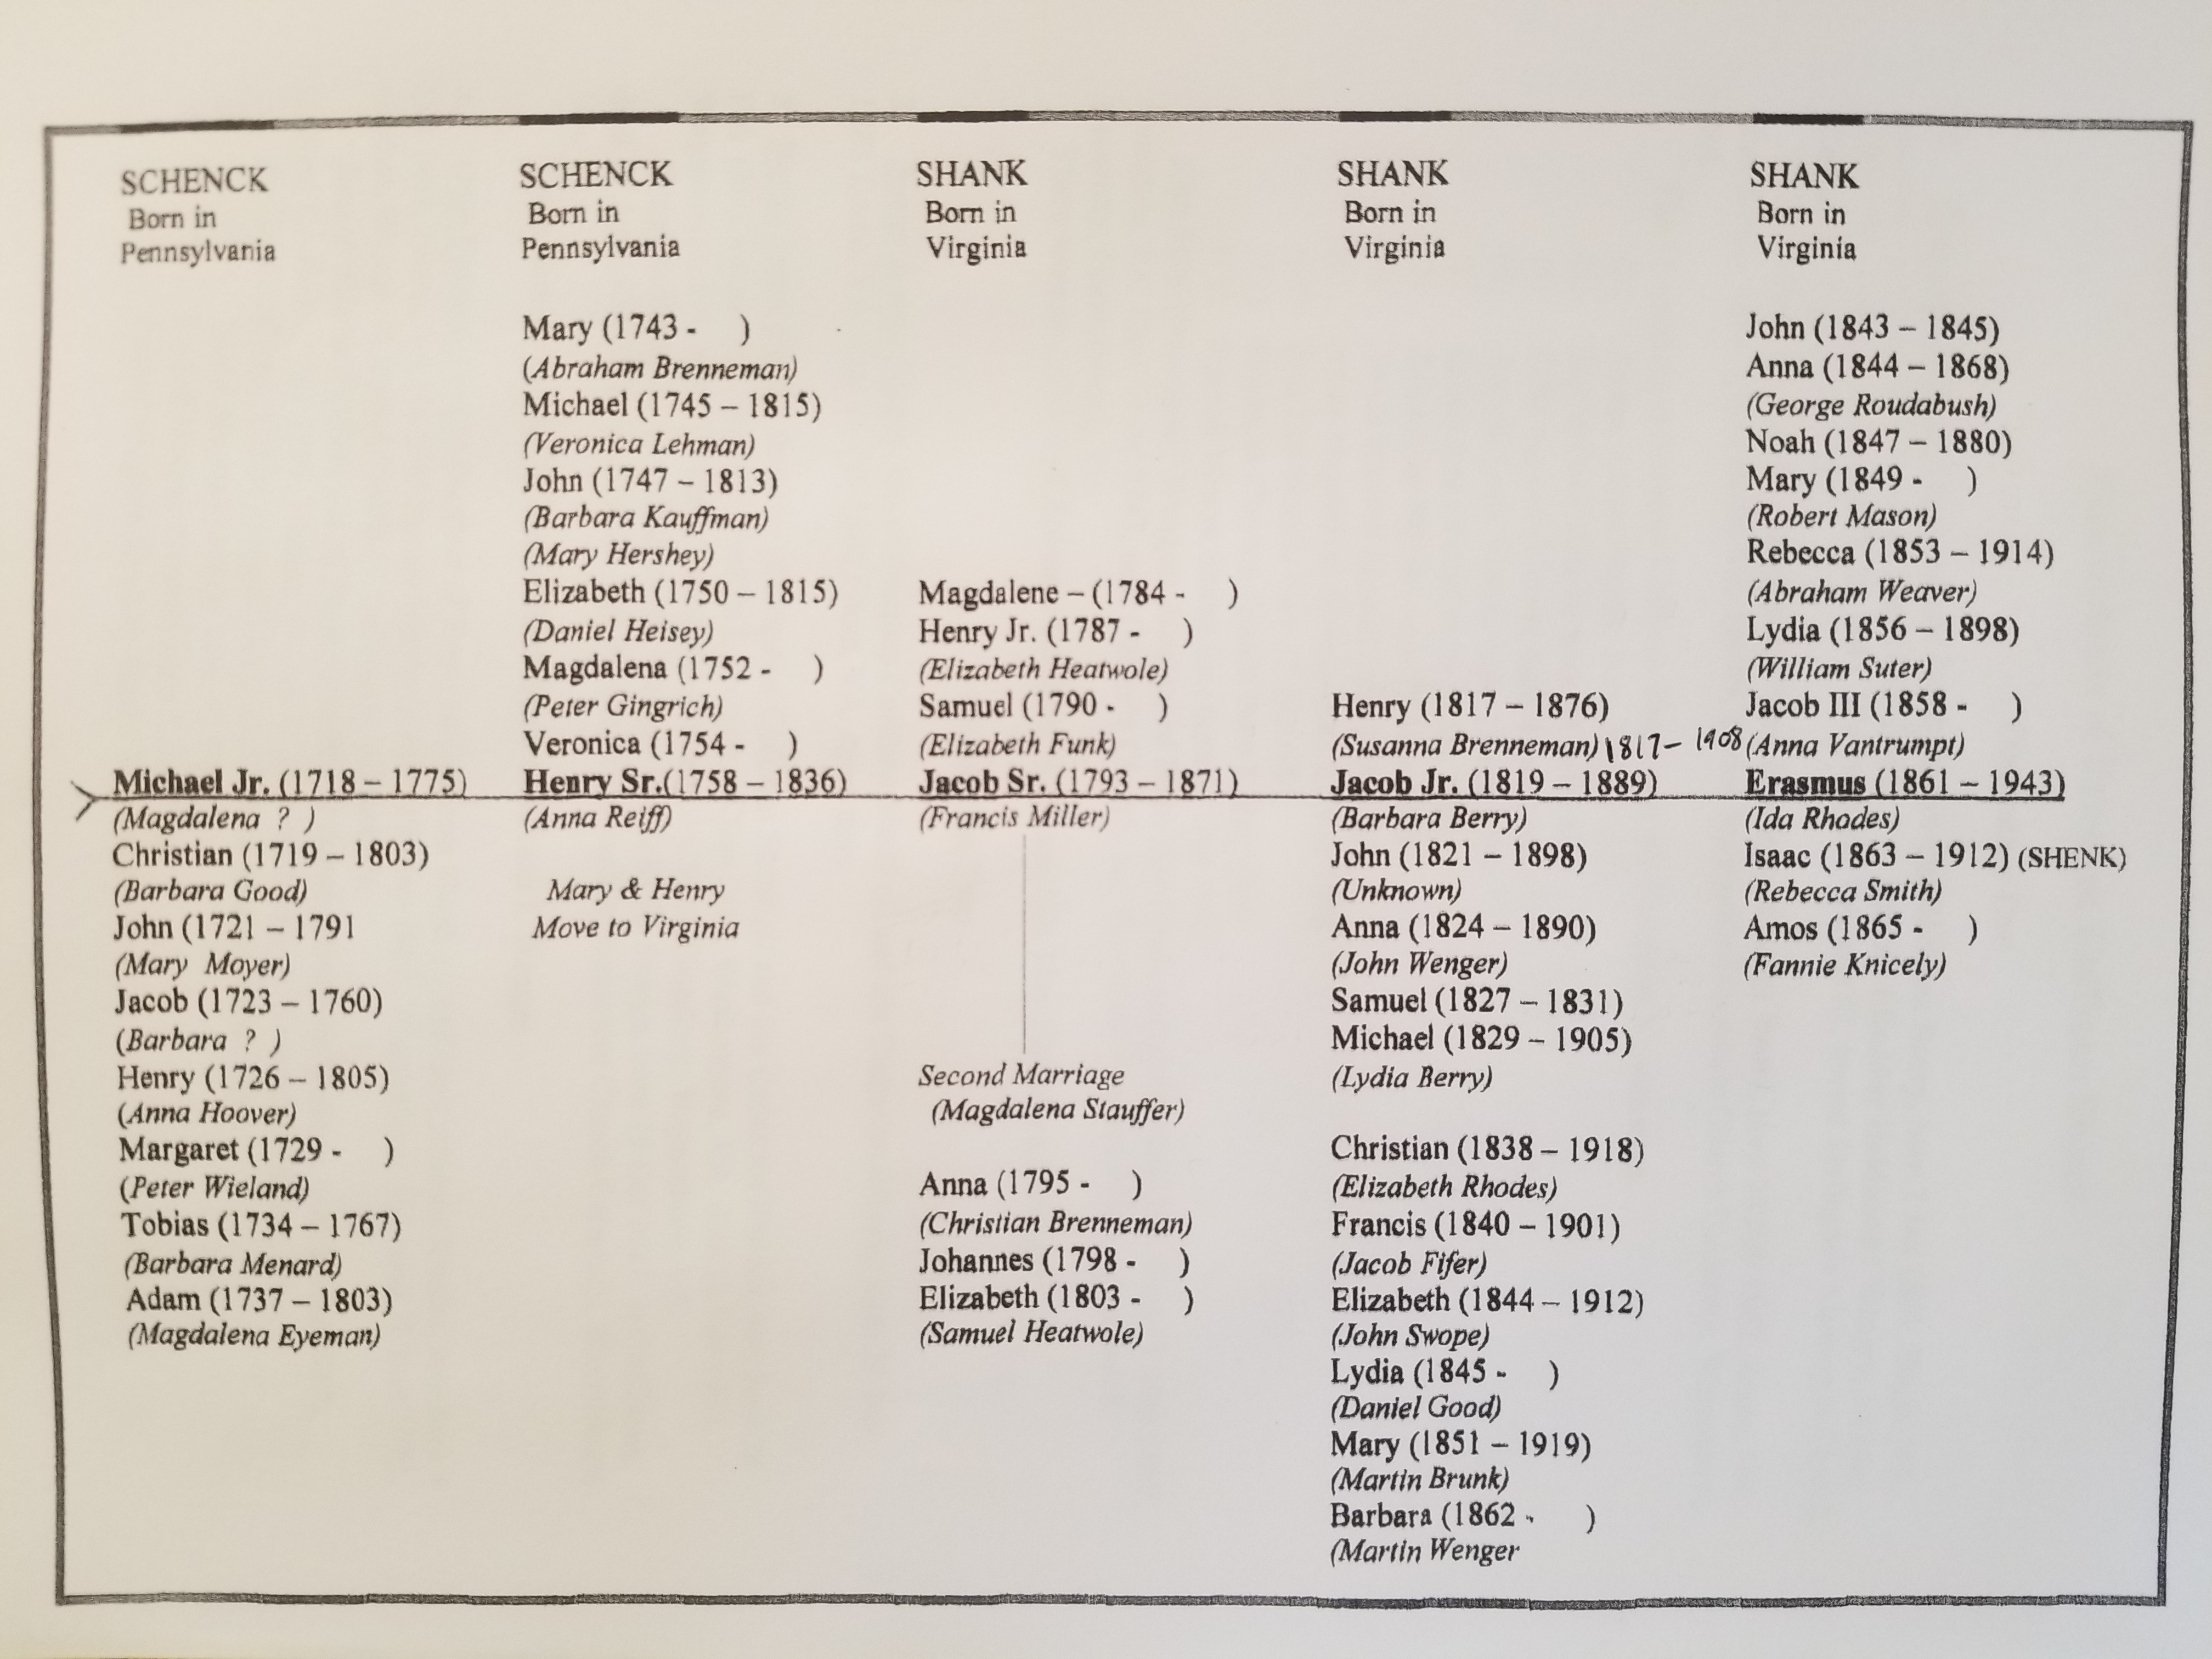 Shank ancestor genealogy continued